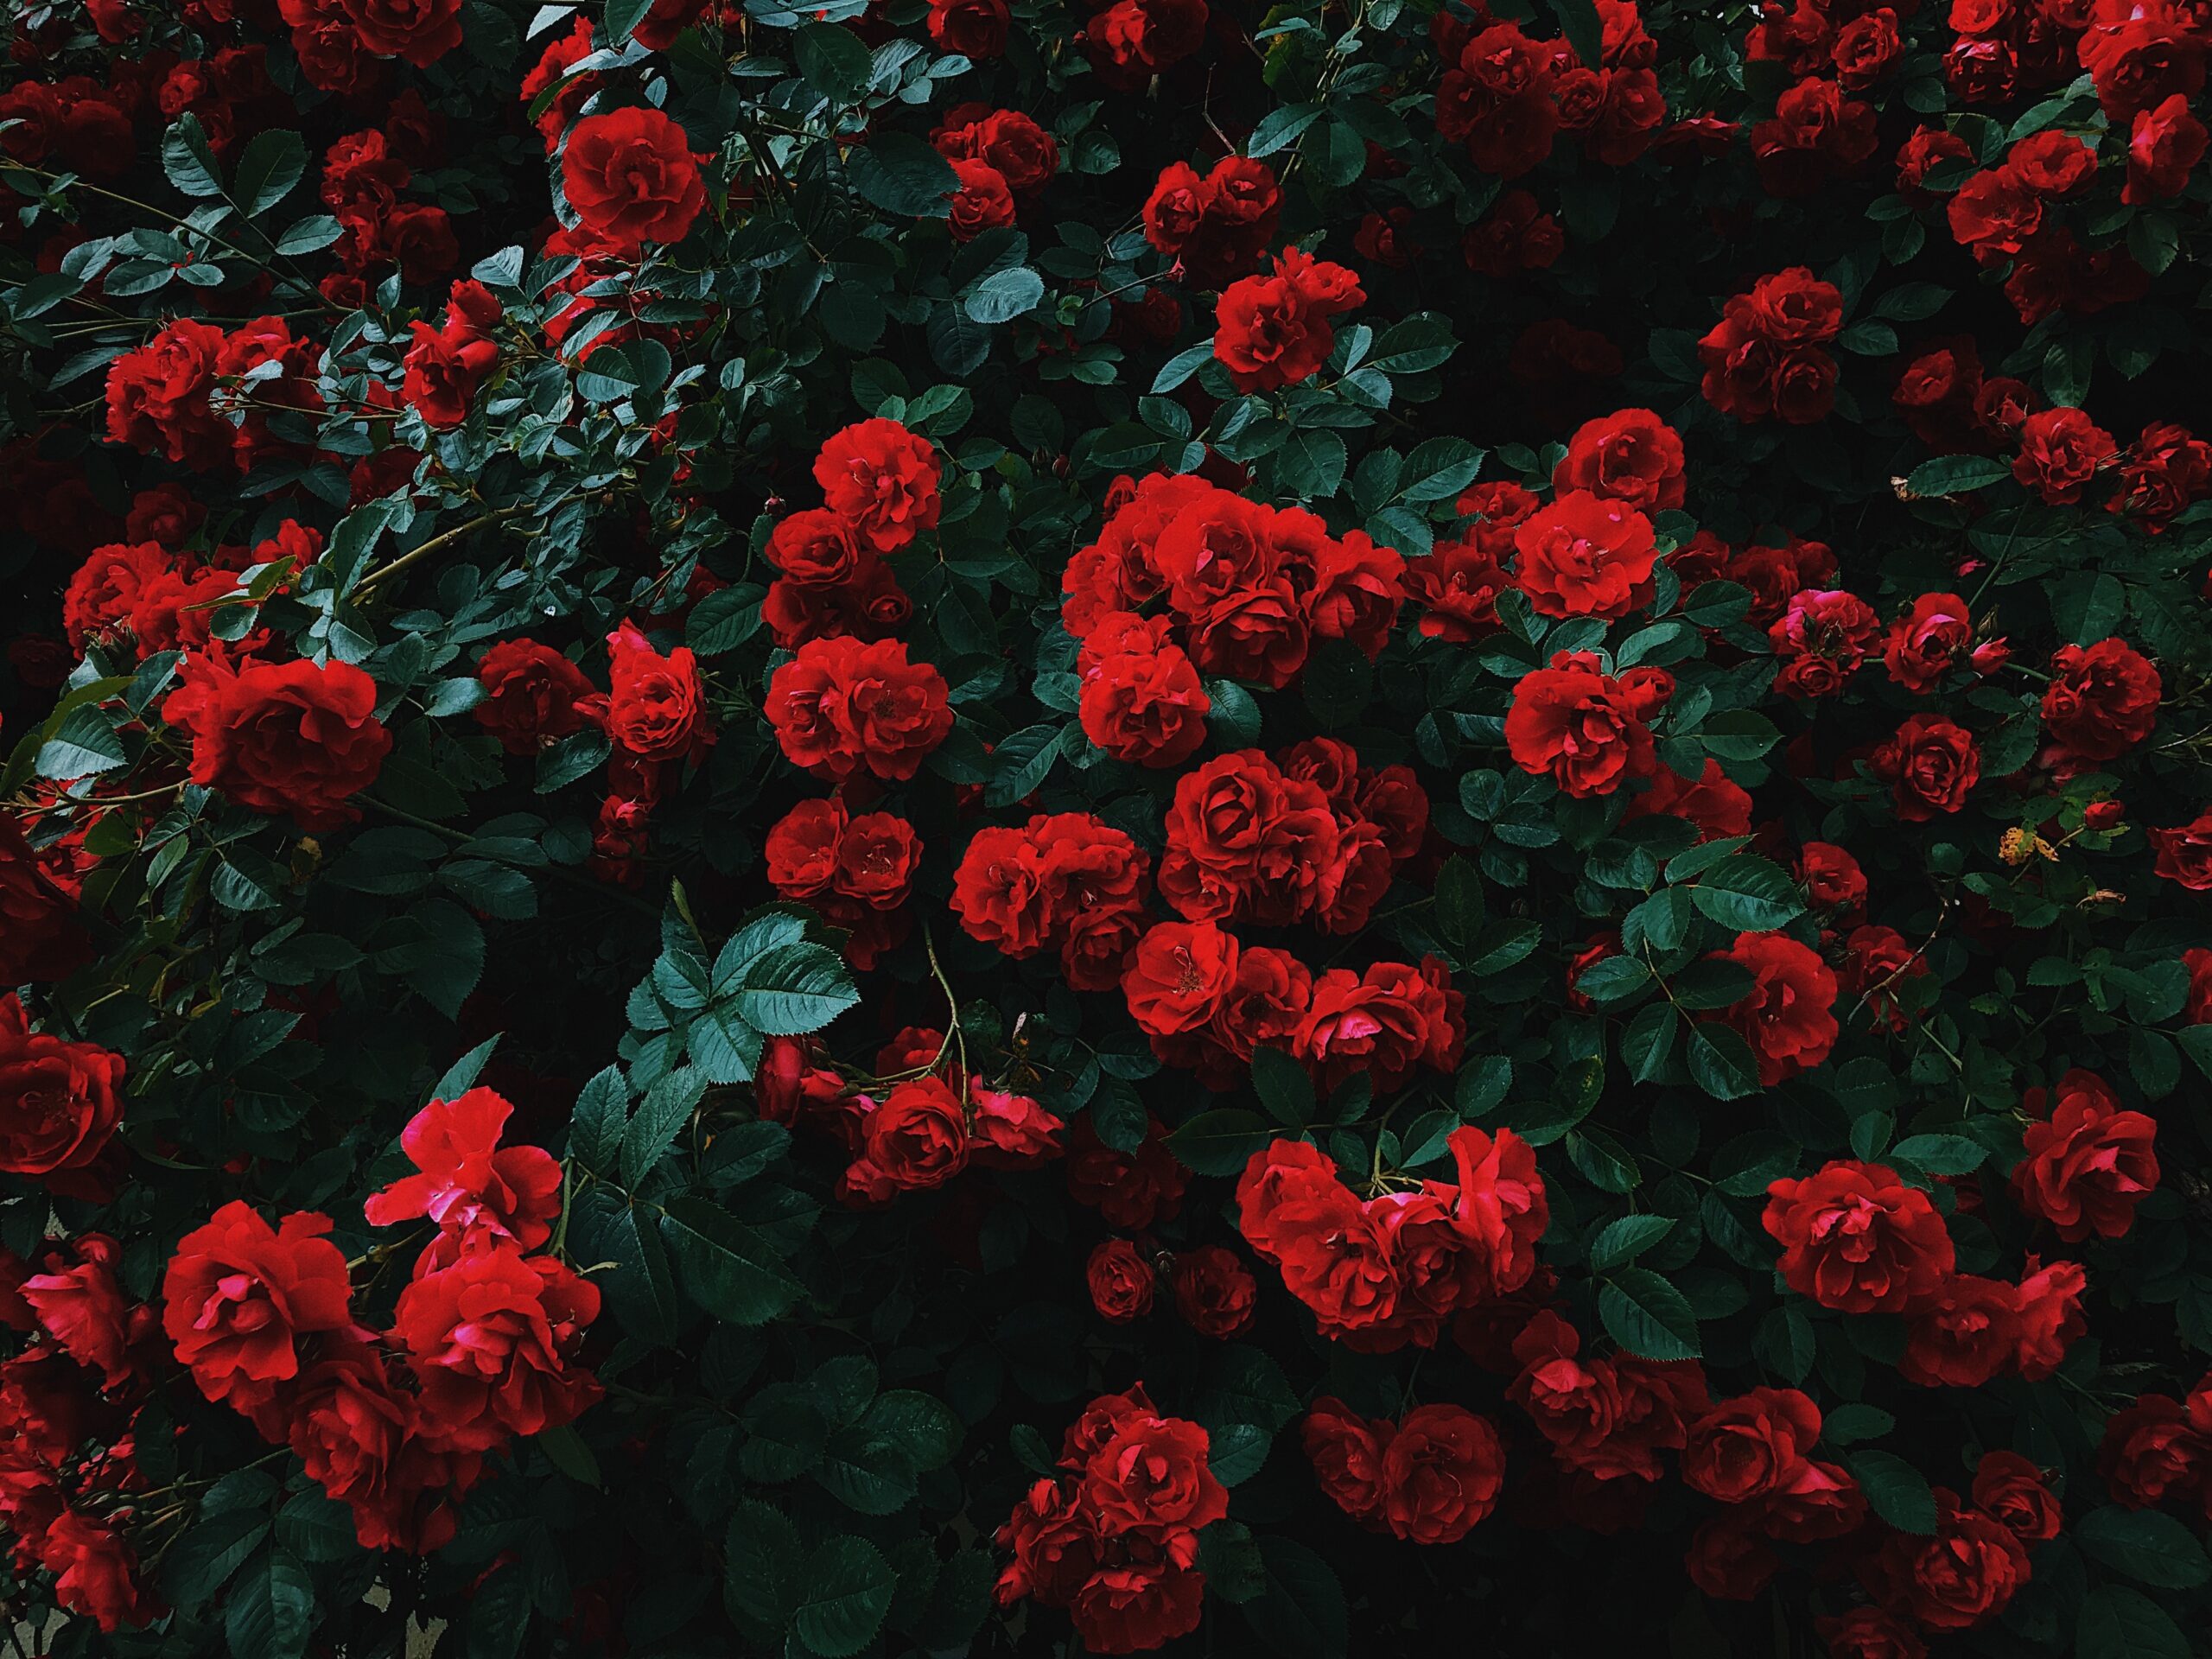 Roses in a field by nikita-tikhomirov-dv7cSiHurKM-unsplash